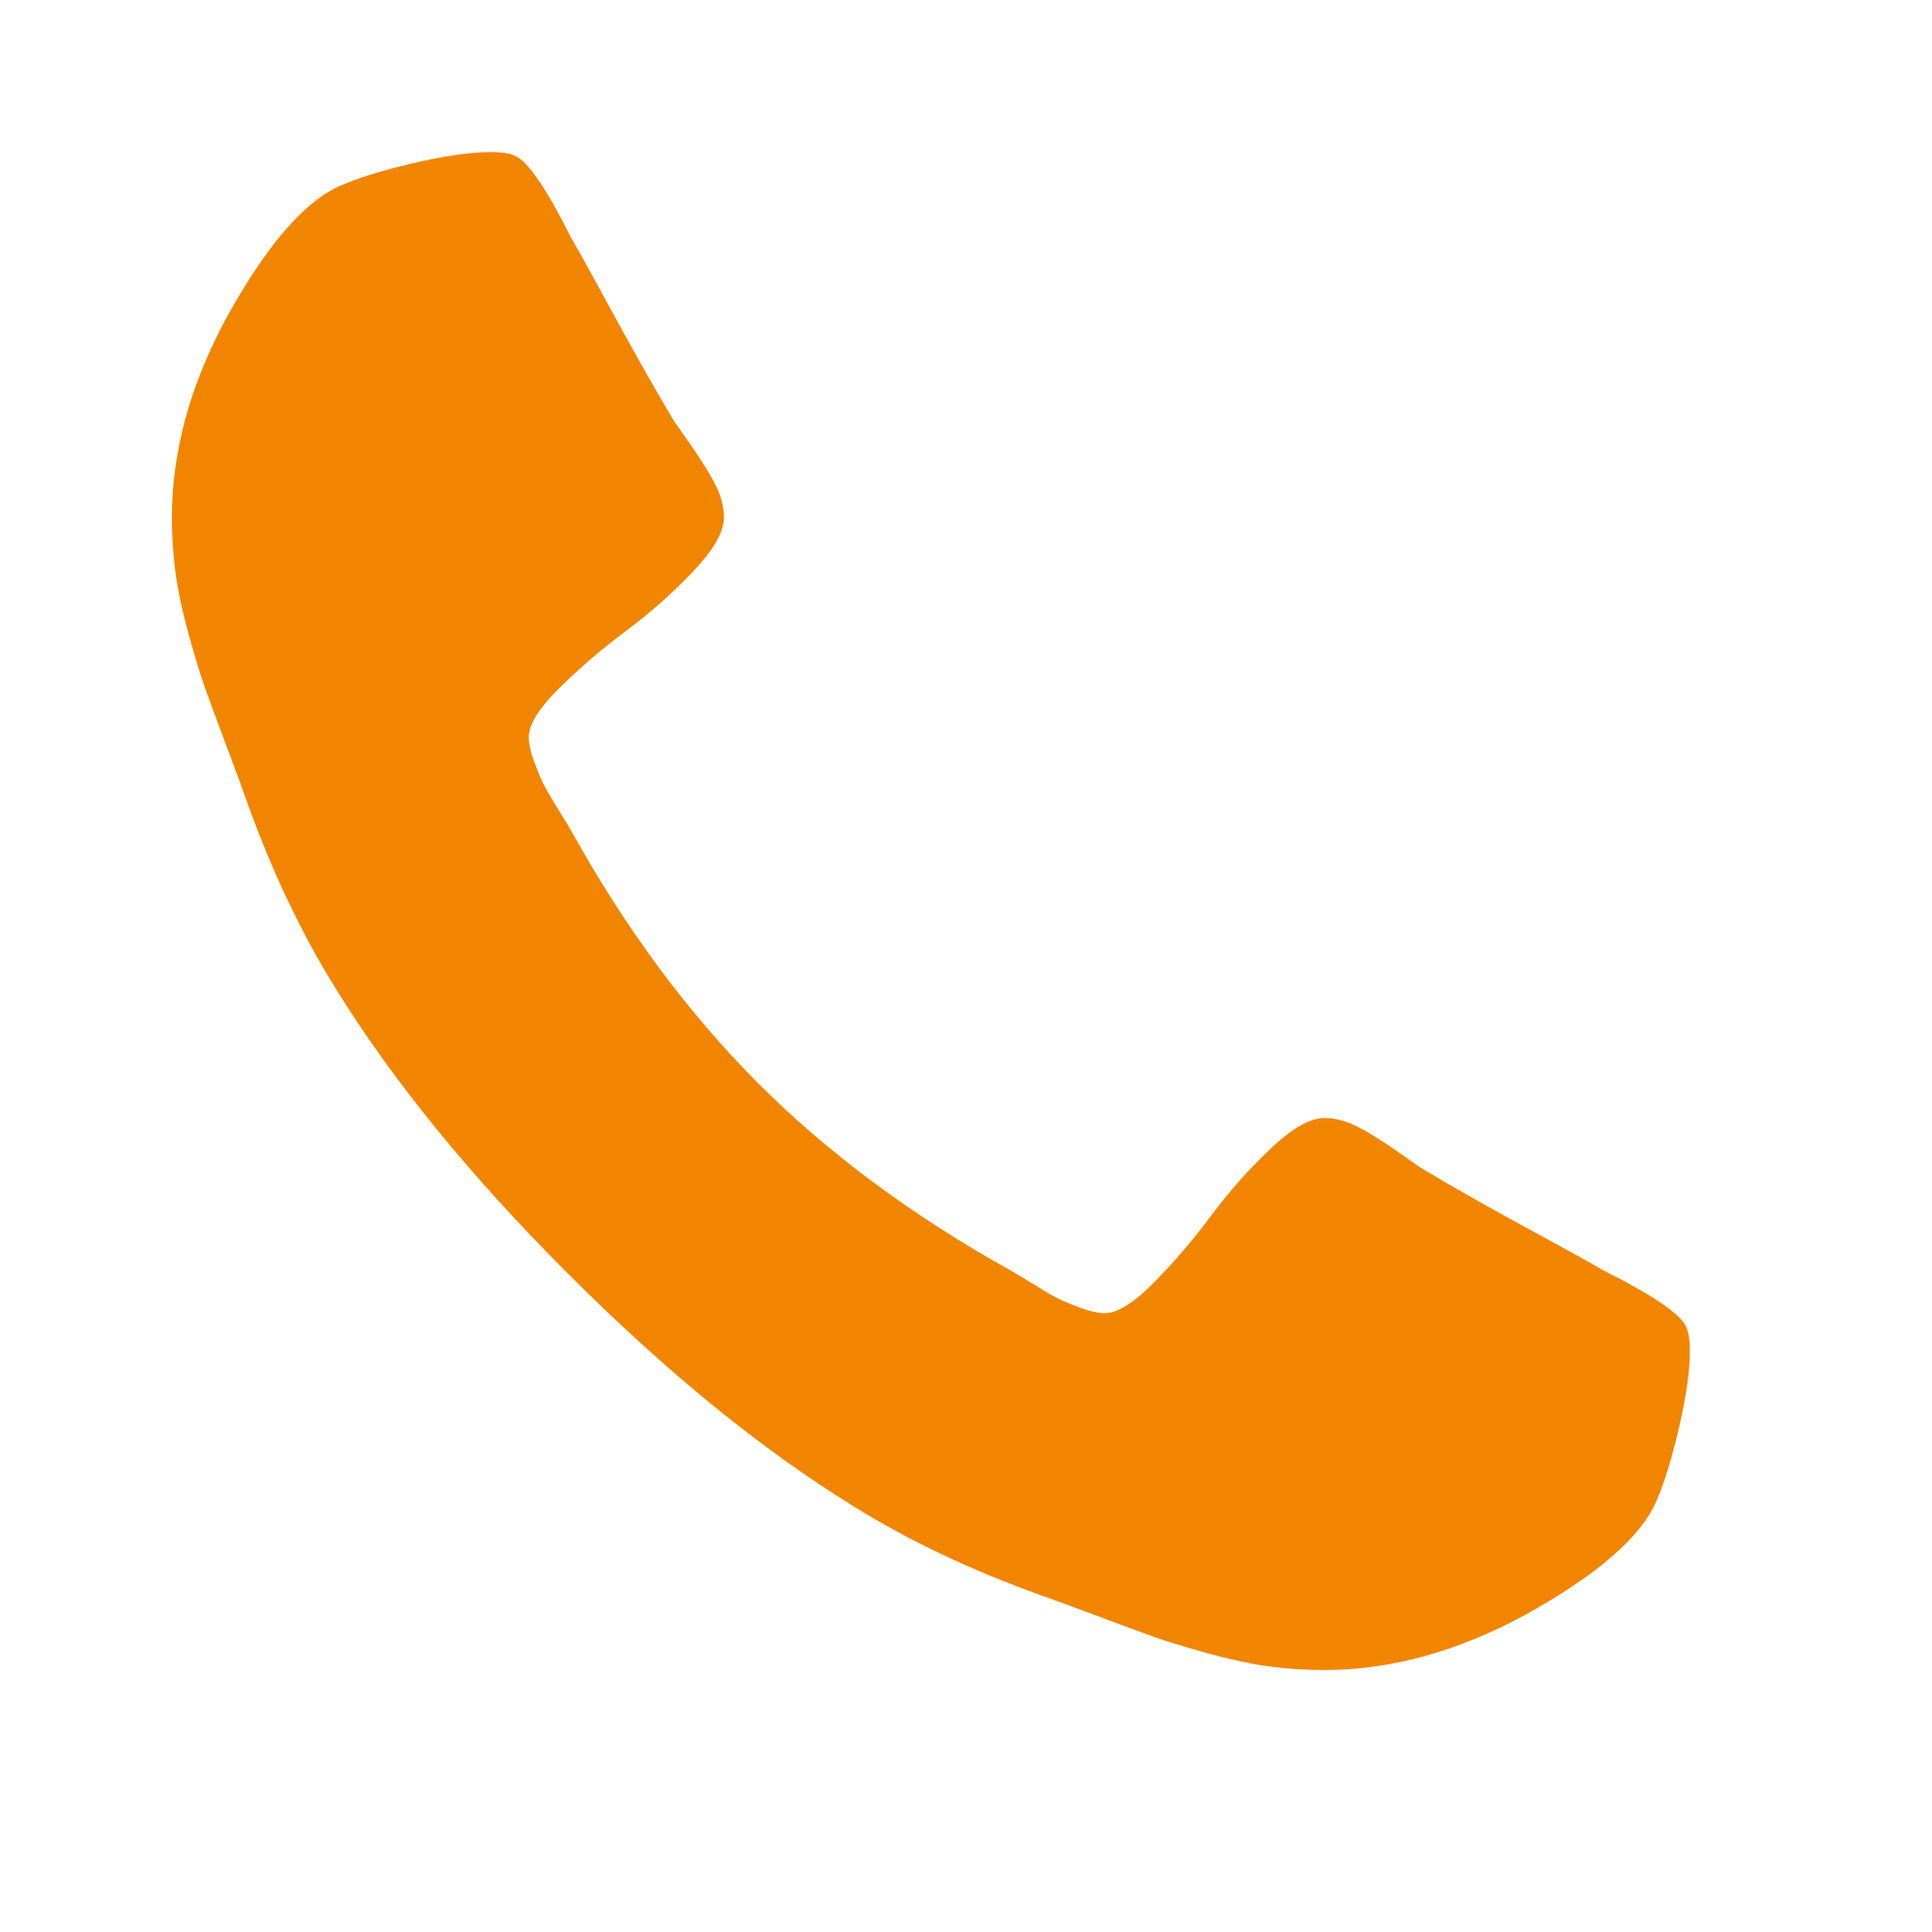 Telephone clipart phone orange, Telephone phone orange